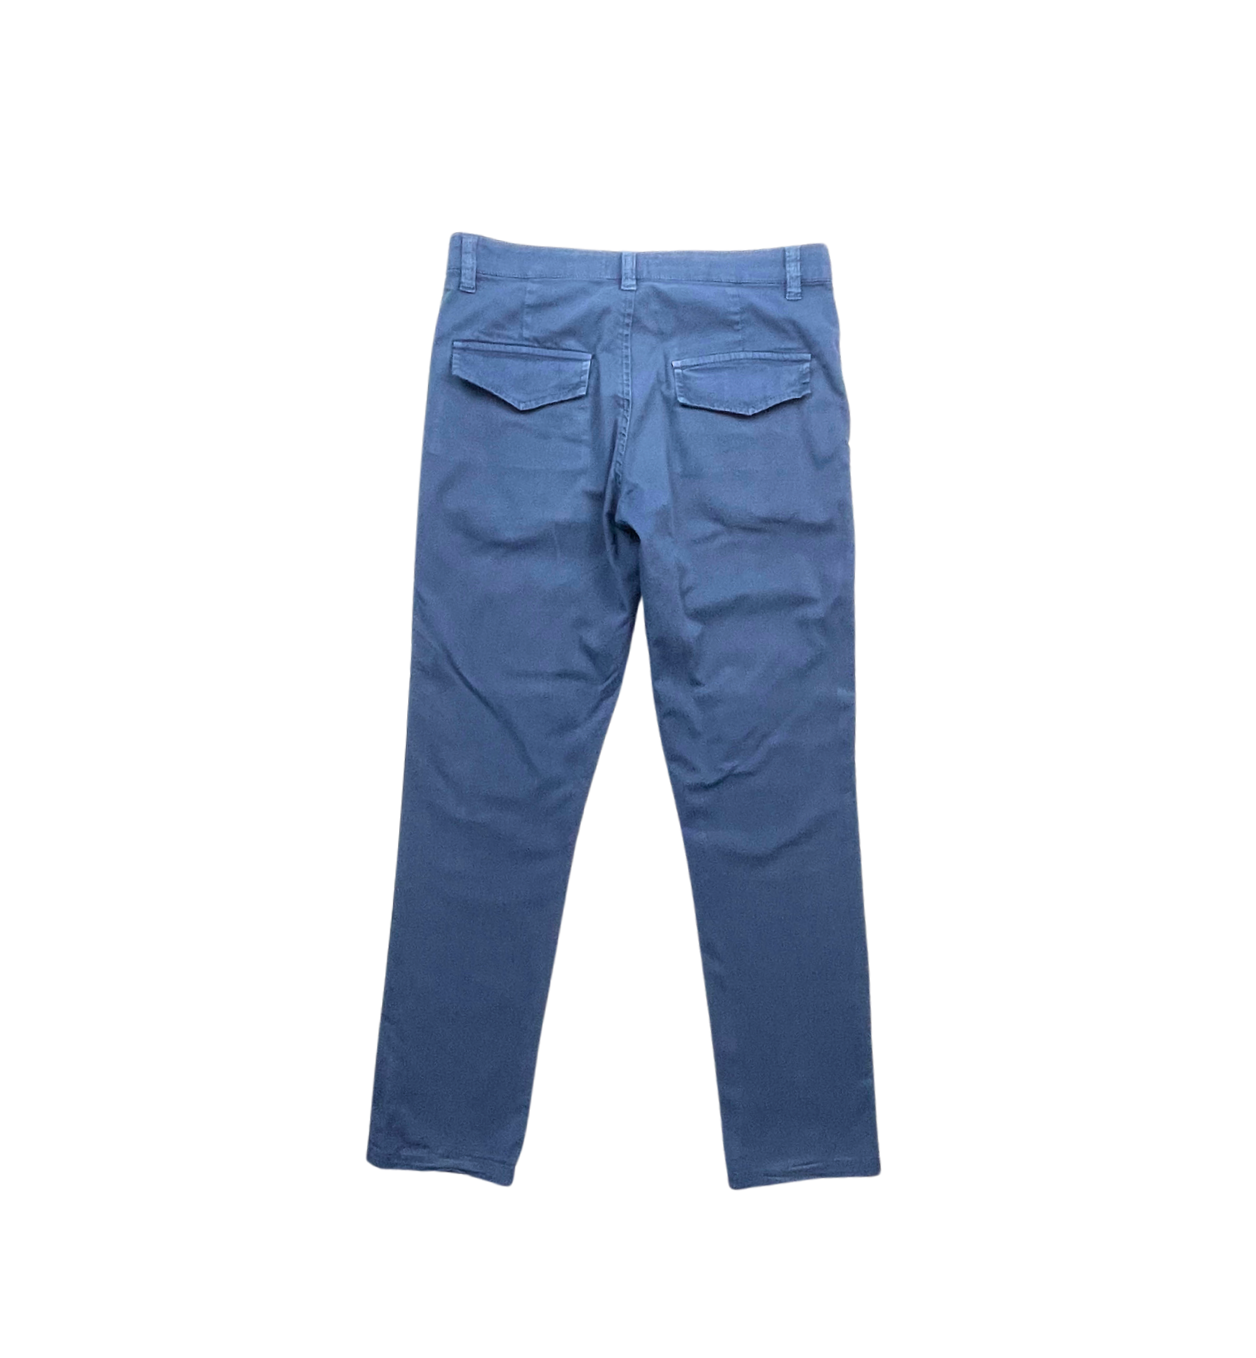 FENDI - Pantalon chino bleu marine - 10 ans